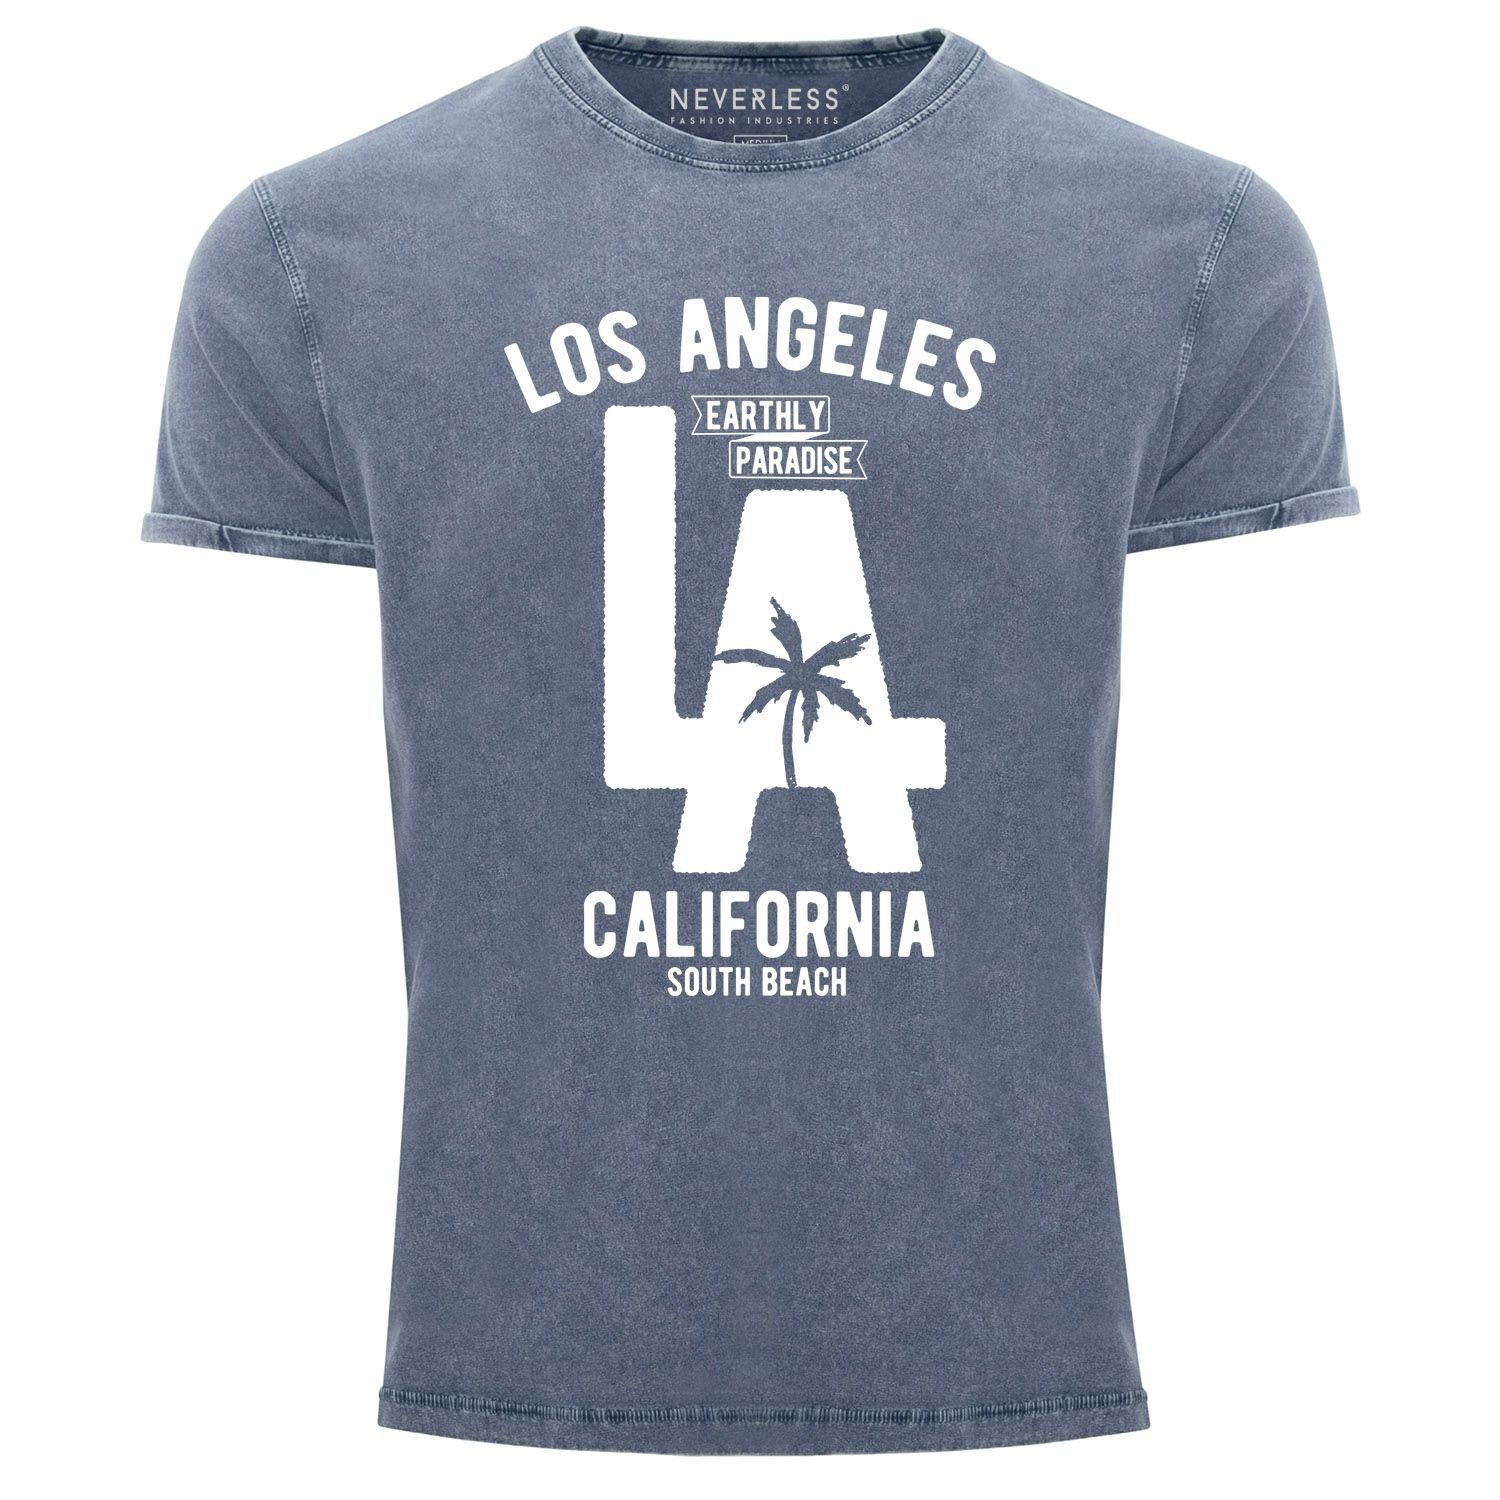 Neverless Print-Shirt Cooles Angesagtes Herren T-Shirt Vintage Shirt LA Los Angeles California Aufdruck Used Look Slim Fit Neverless® mit Print blau